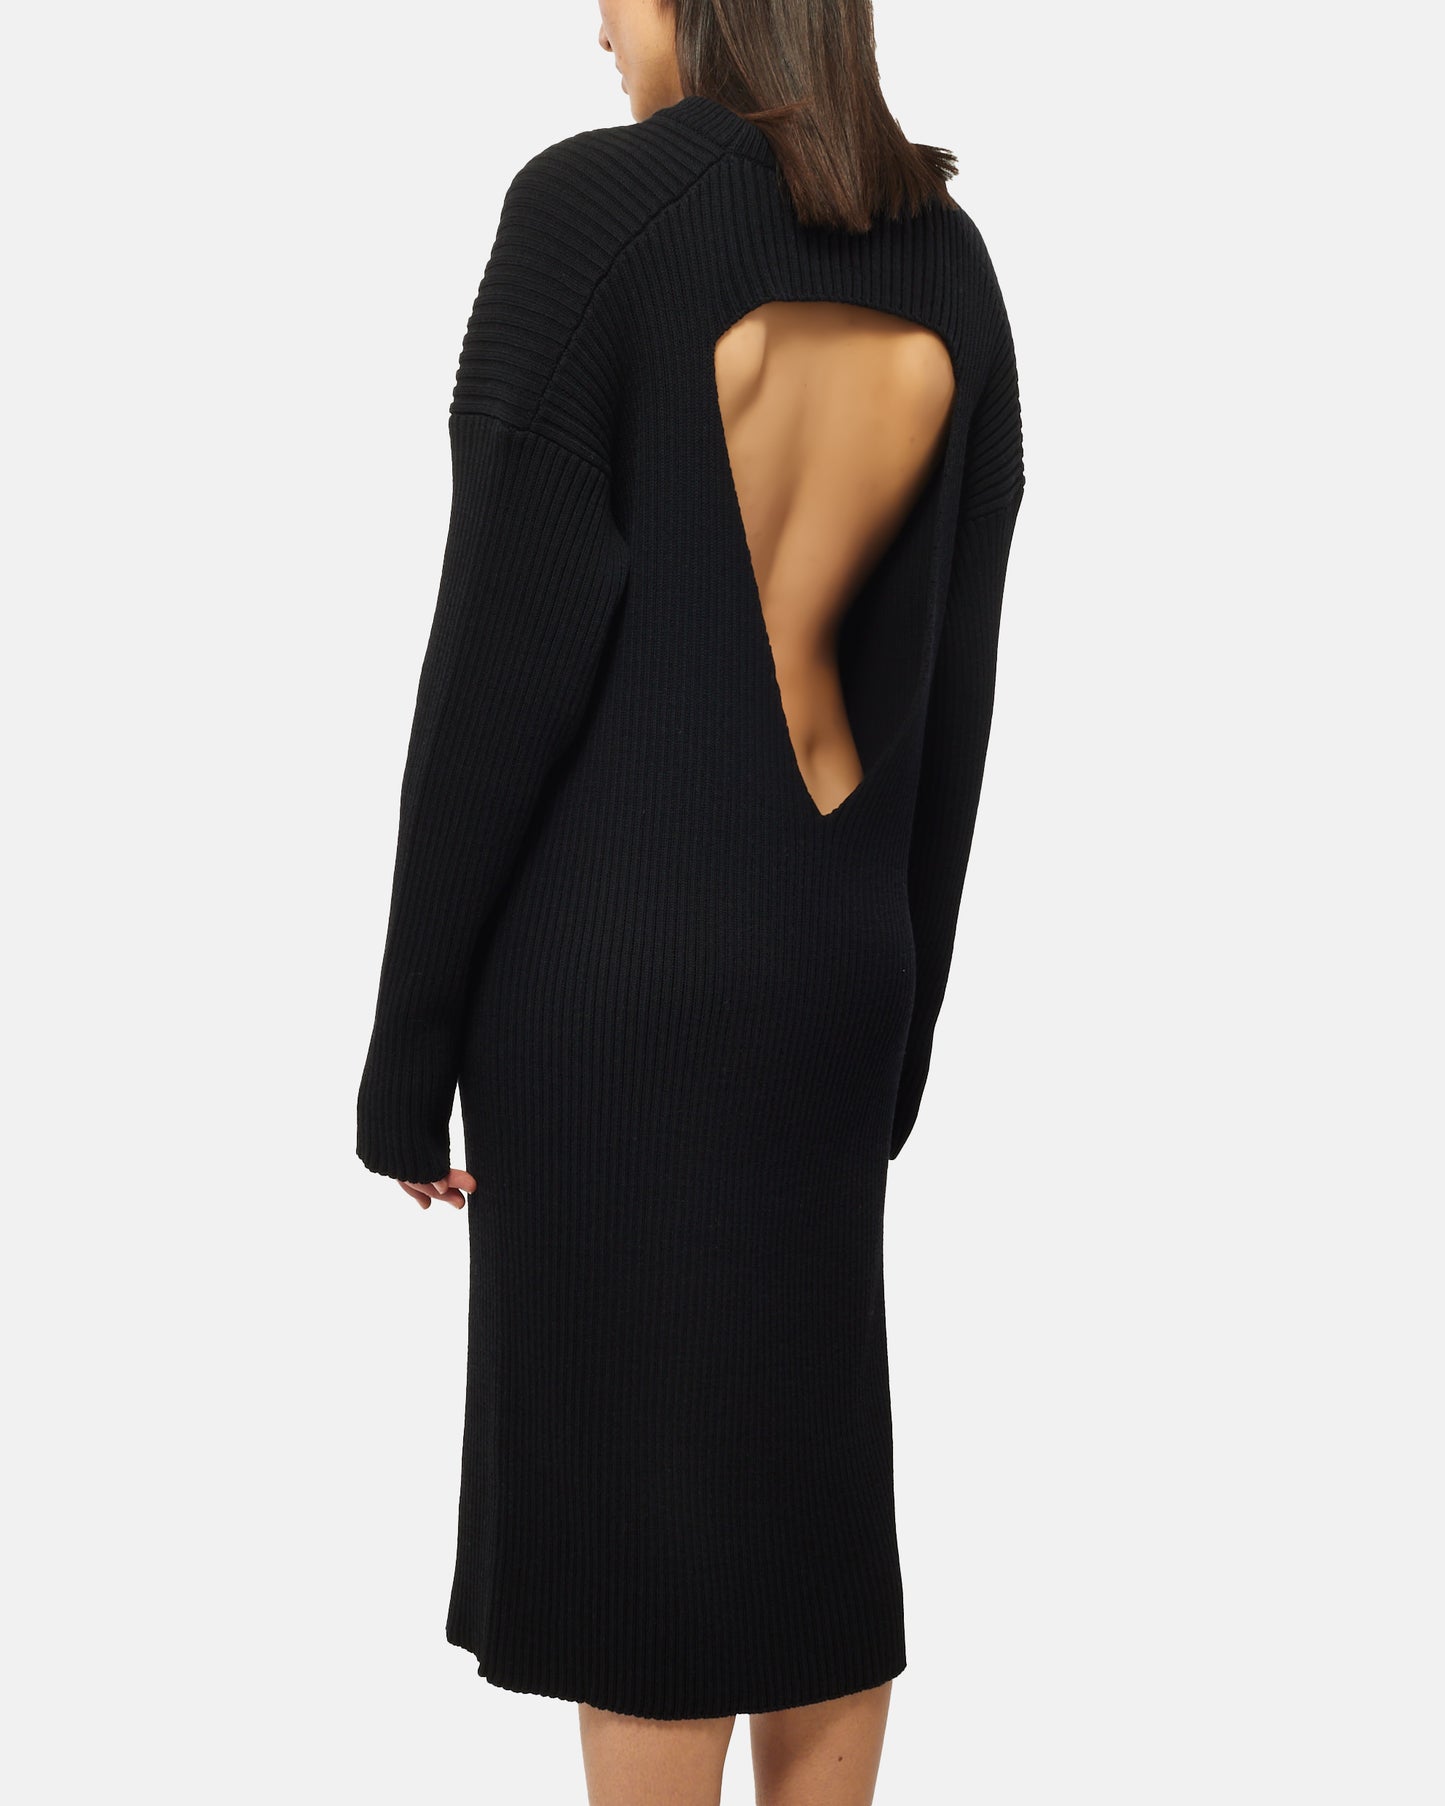 Bottega Veneta Black Knit Backless Midi Dress - S